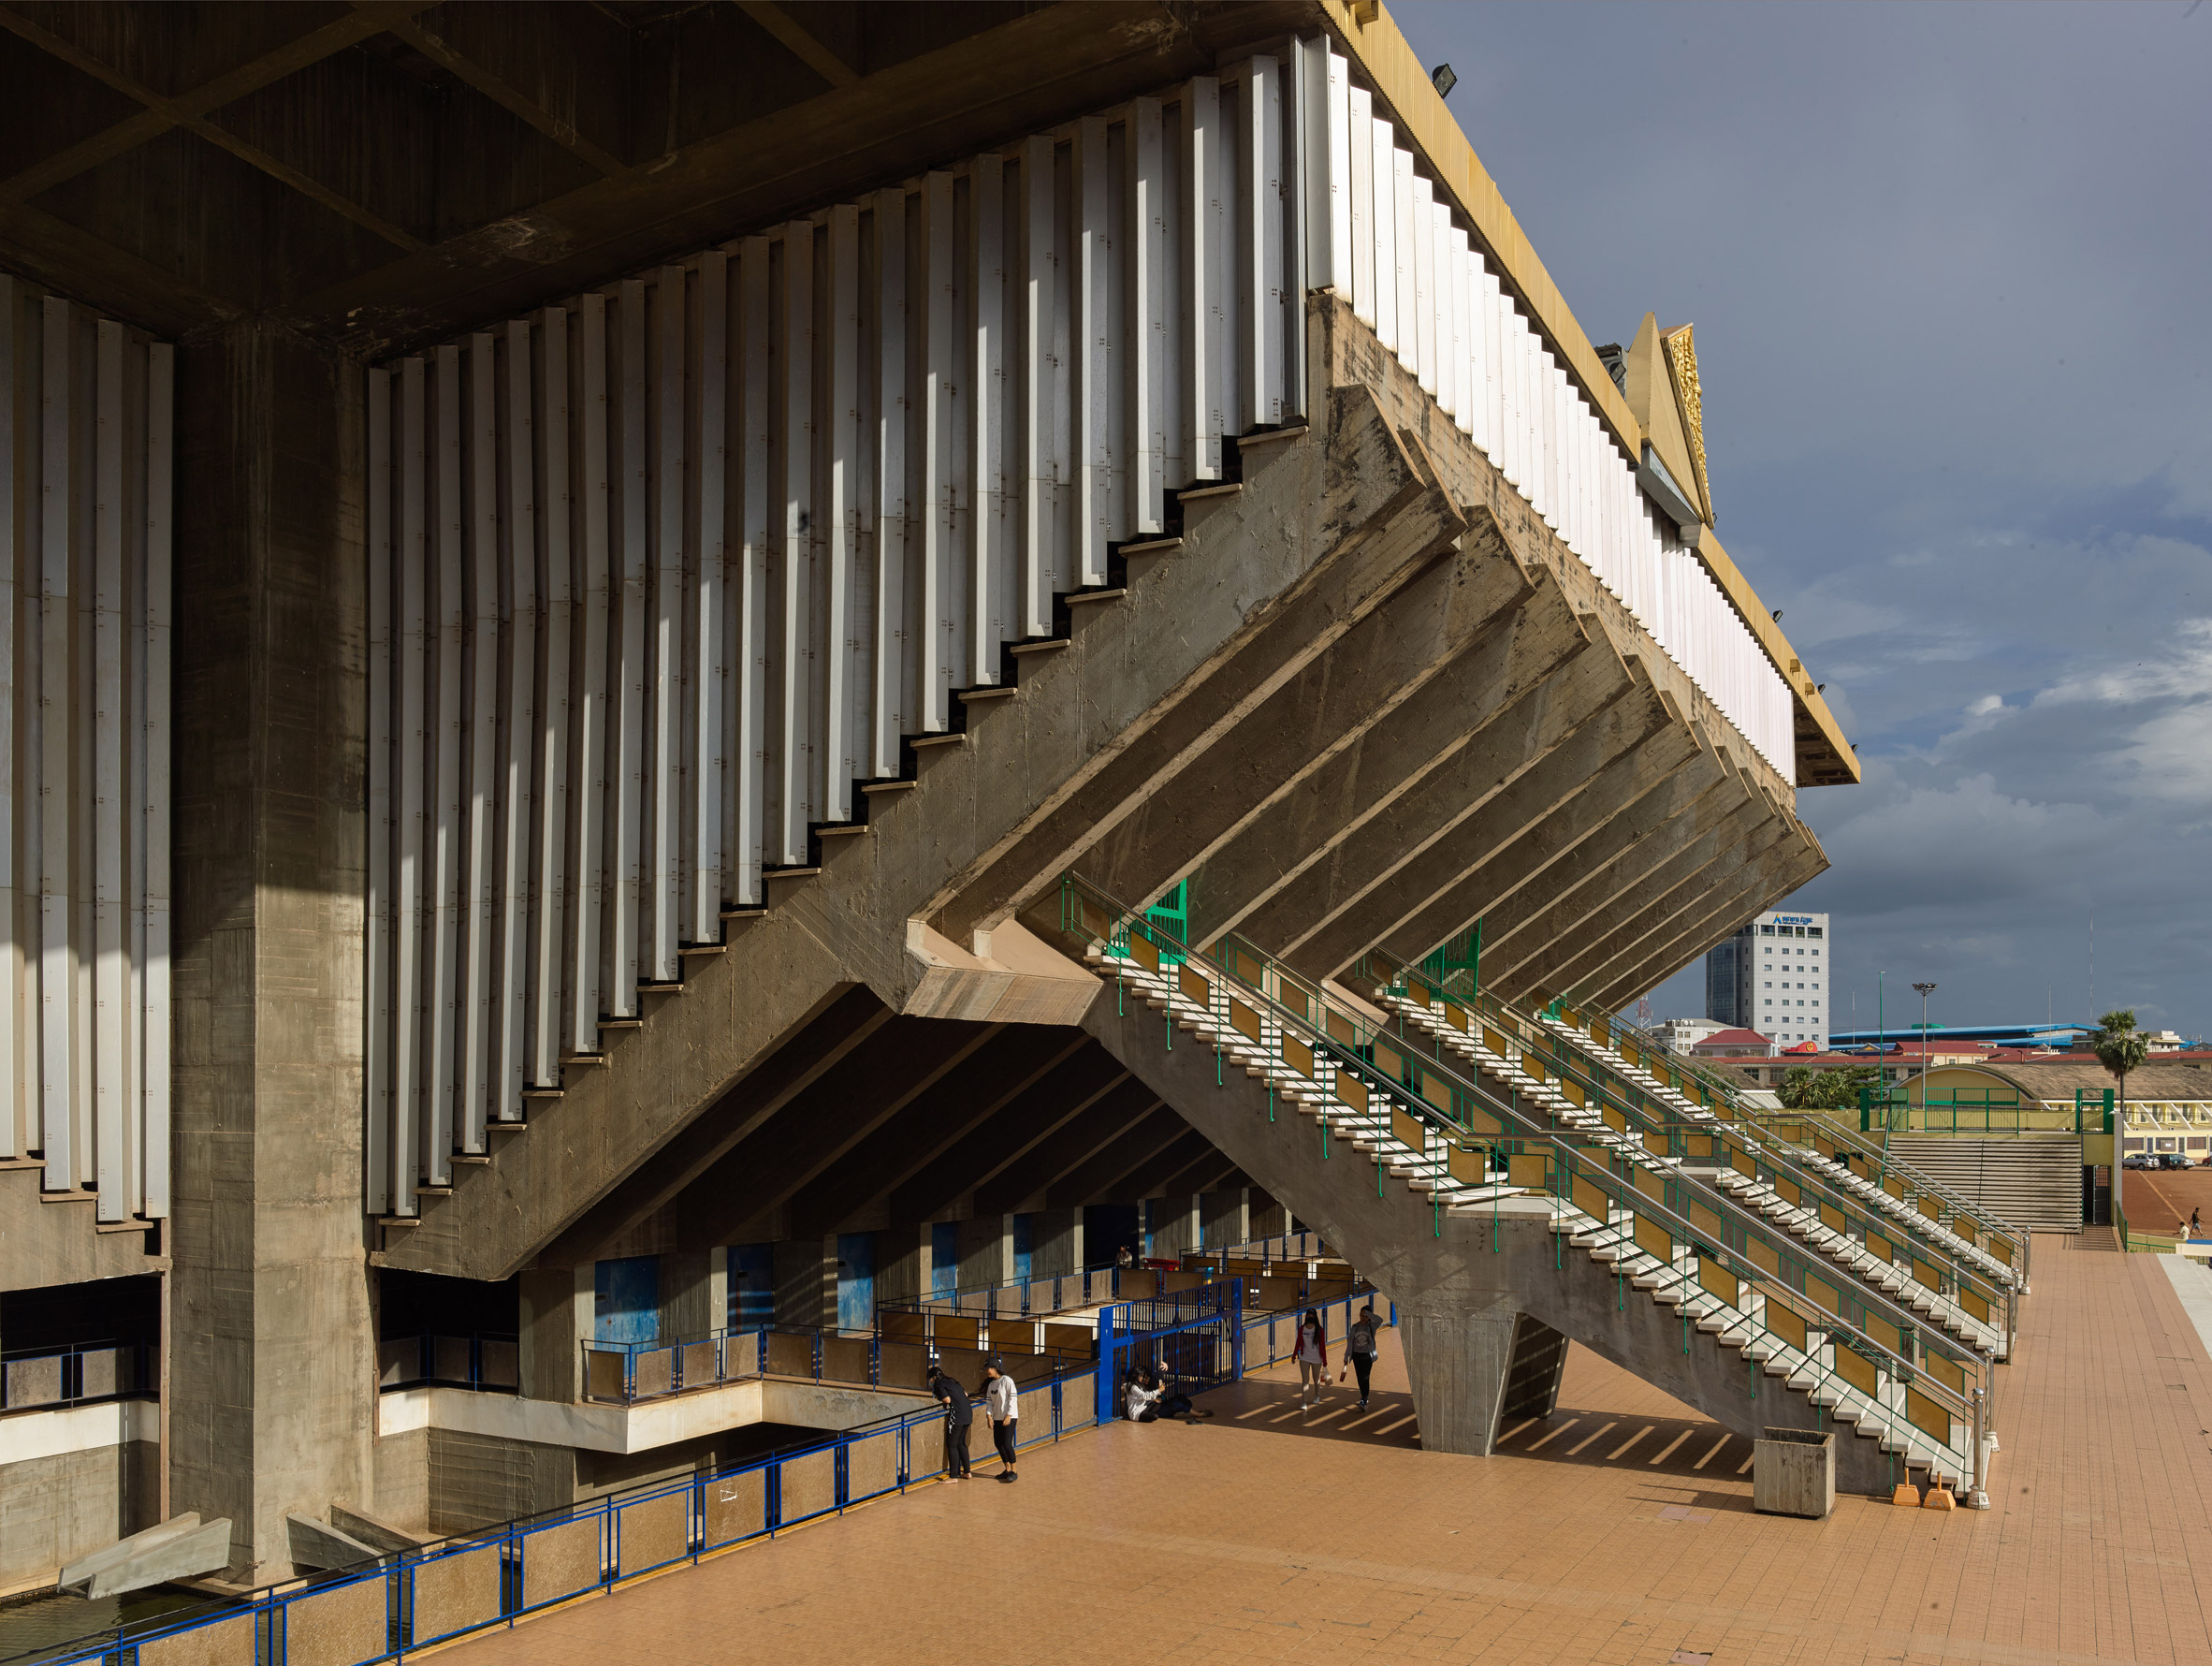 The National Olympic Stadium by Van Molyvann